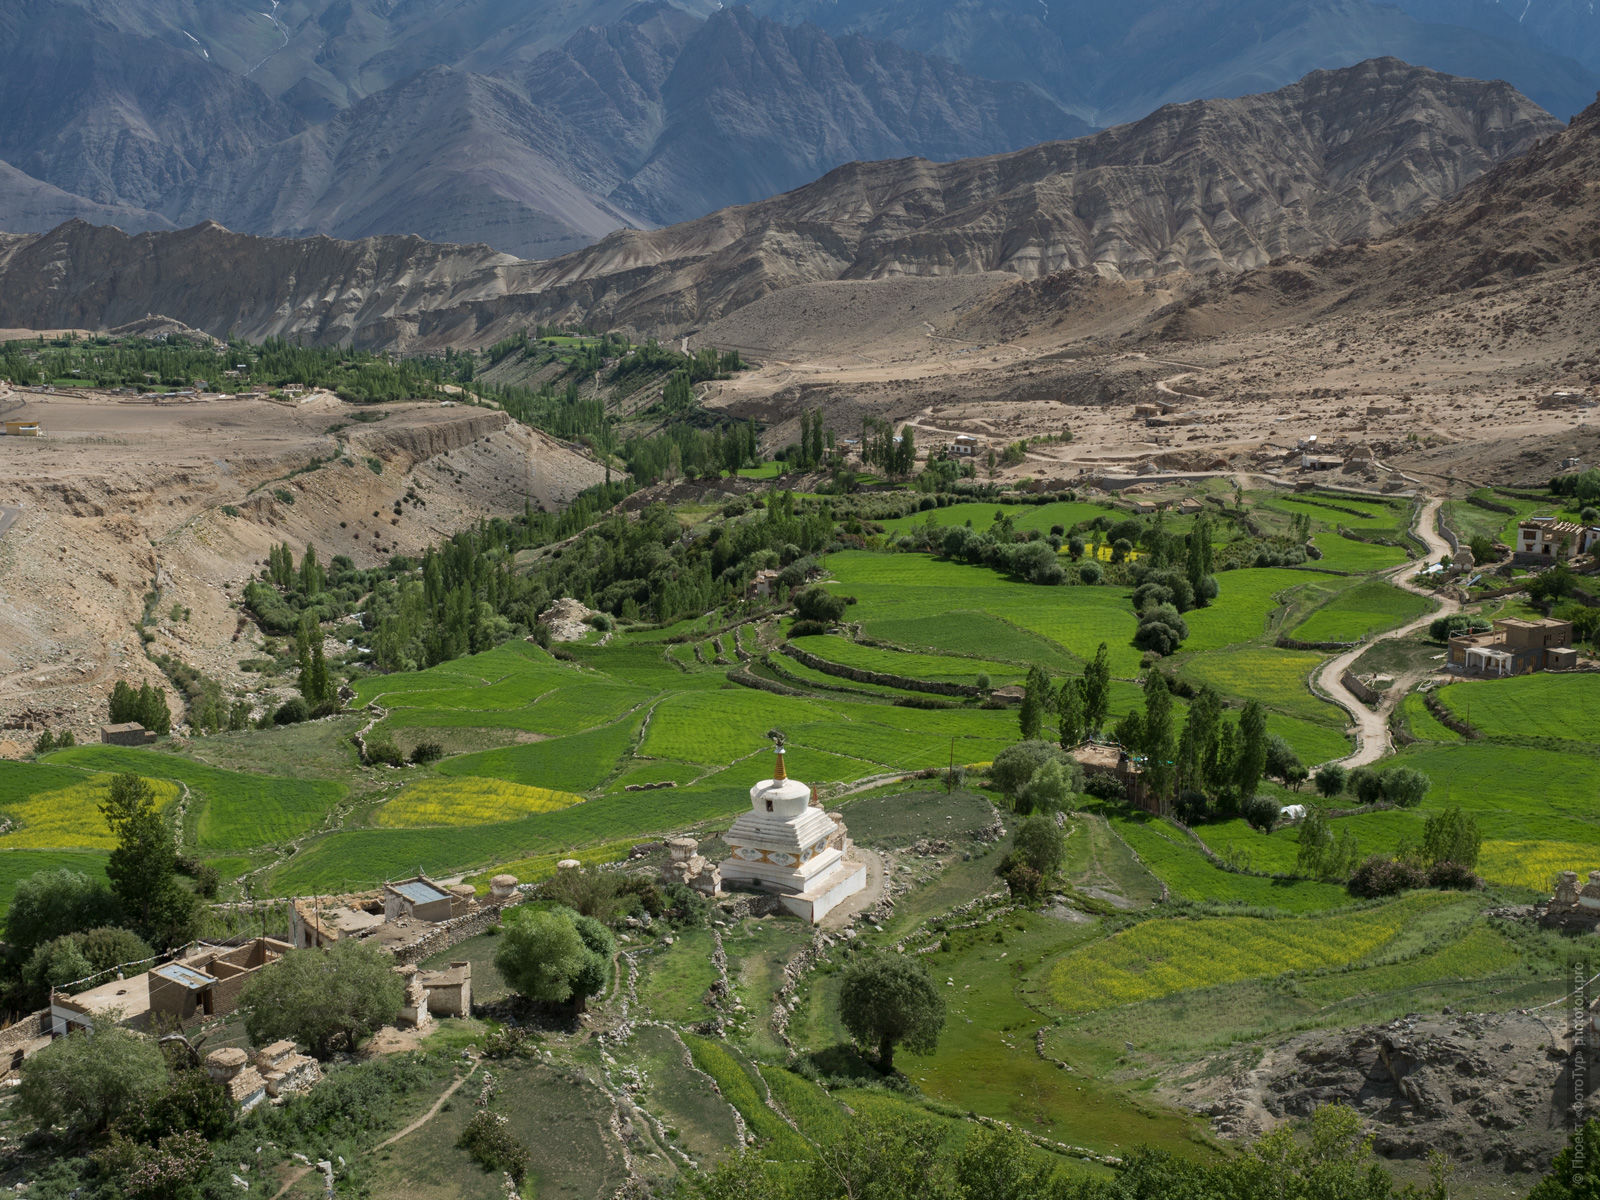 Hemis Shukpachans mountain village, Ladakh womens tour, August 31 - September 14, 2019.